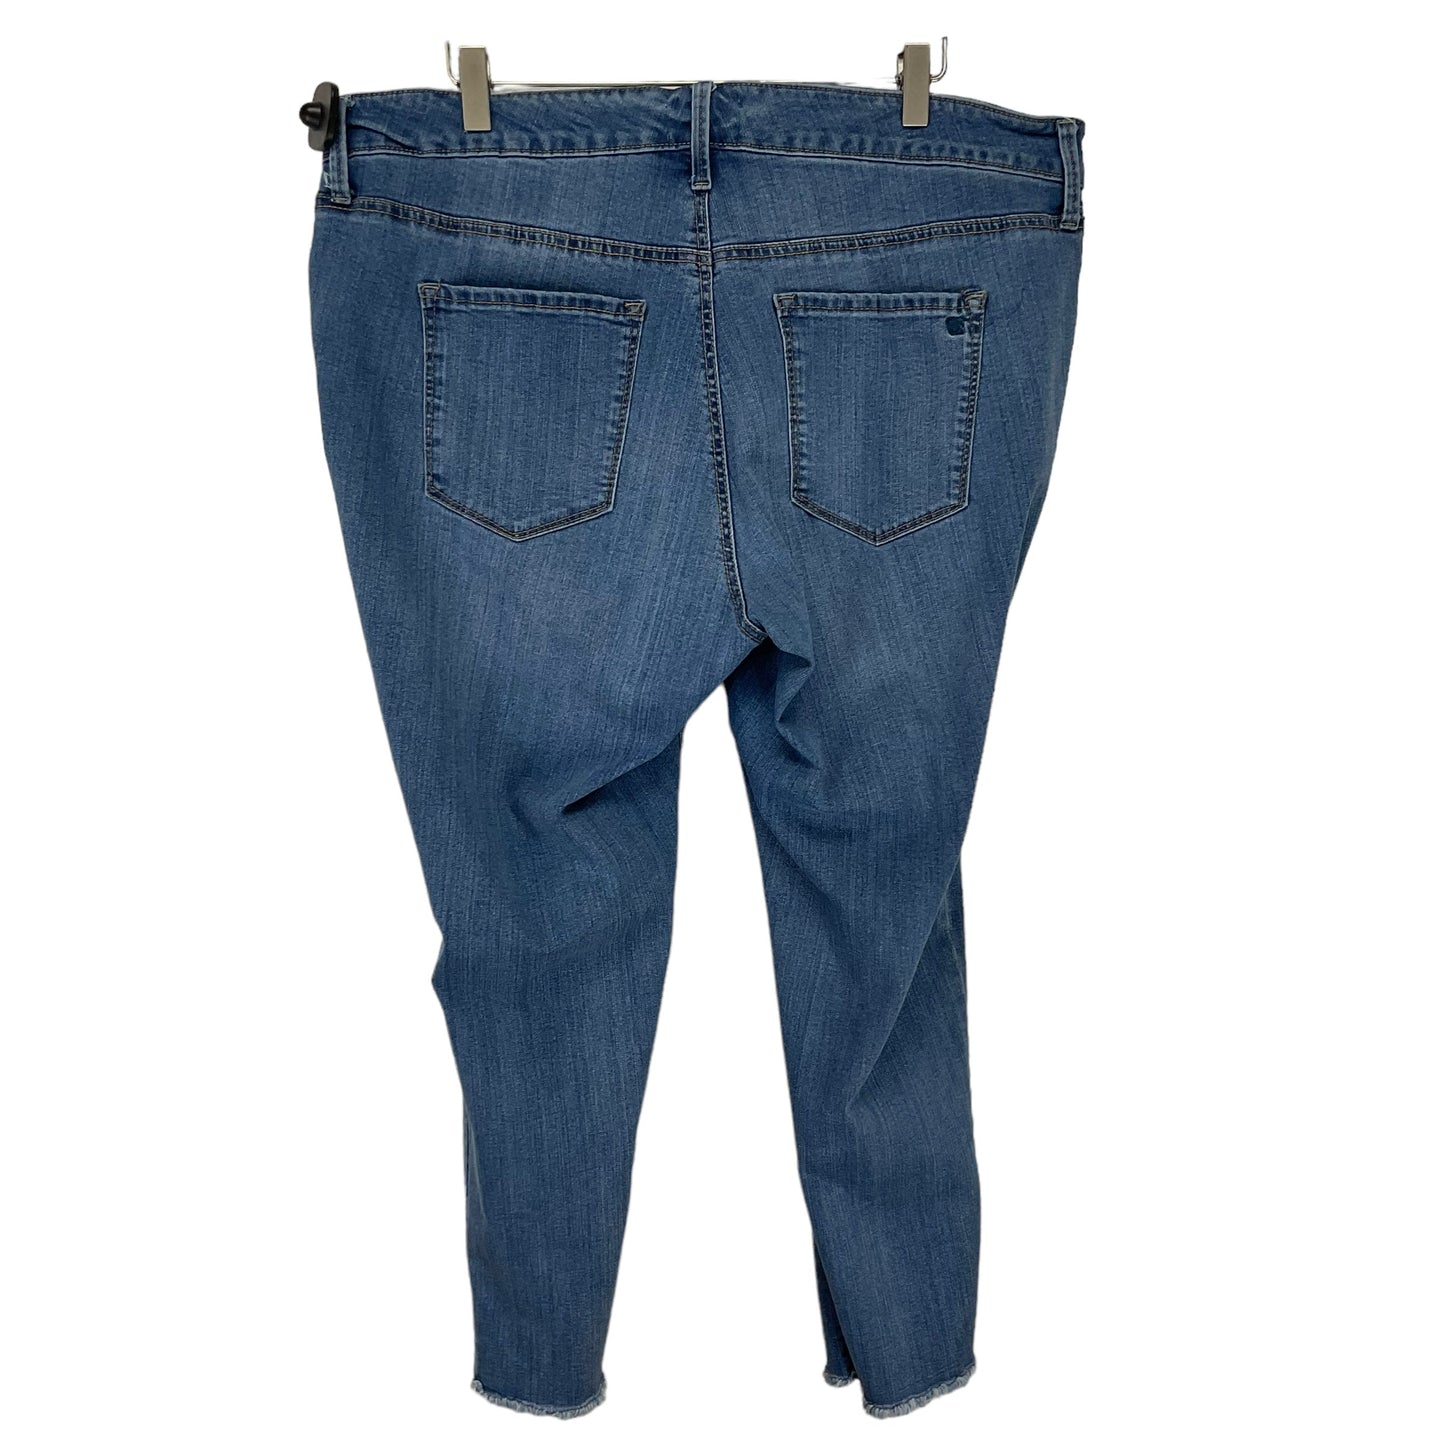 Jeans Skinny By Jessica Simpson  Size: 18